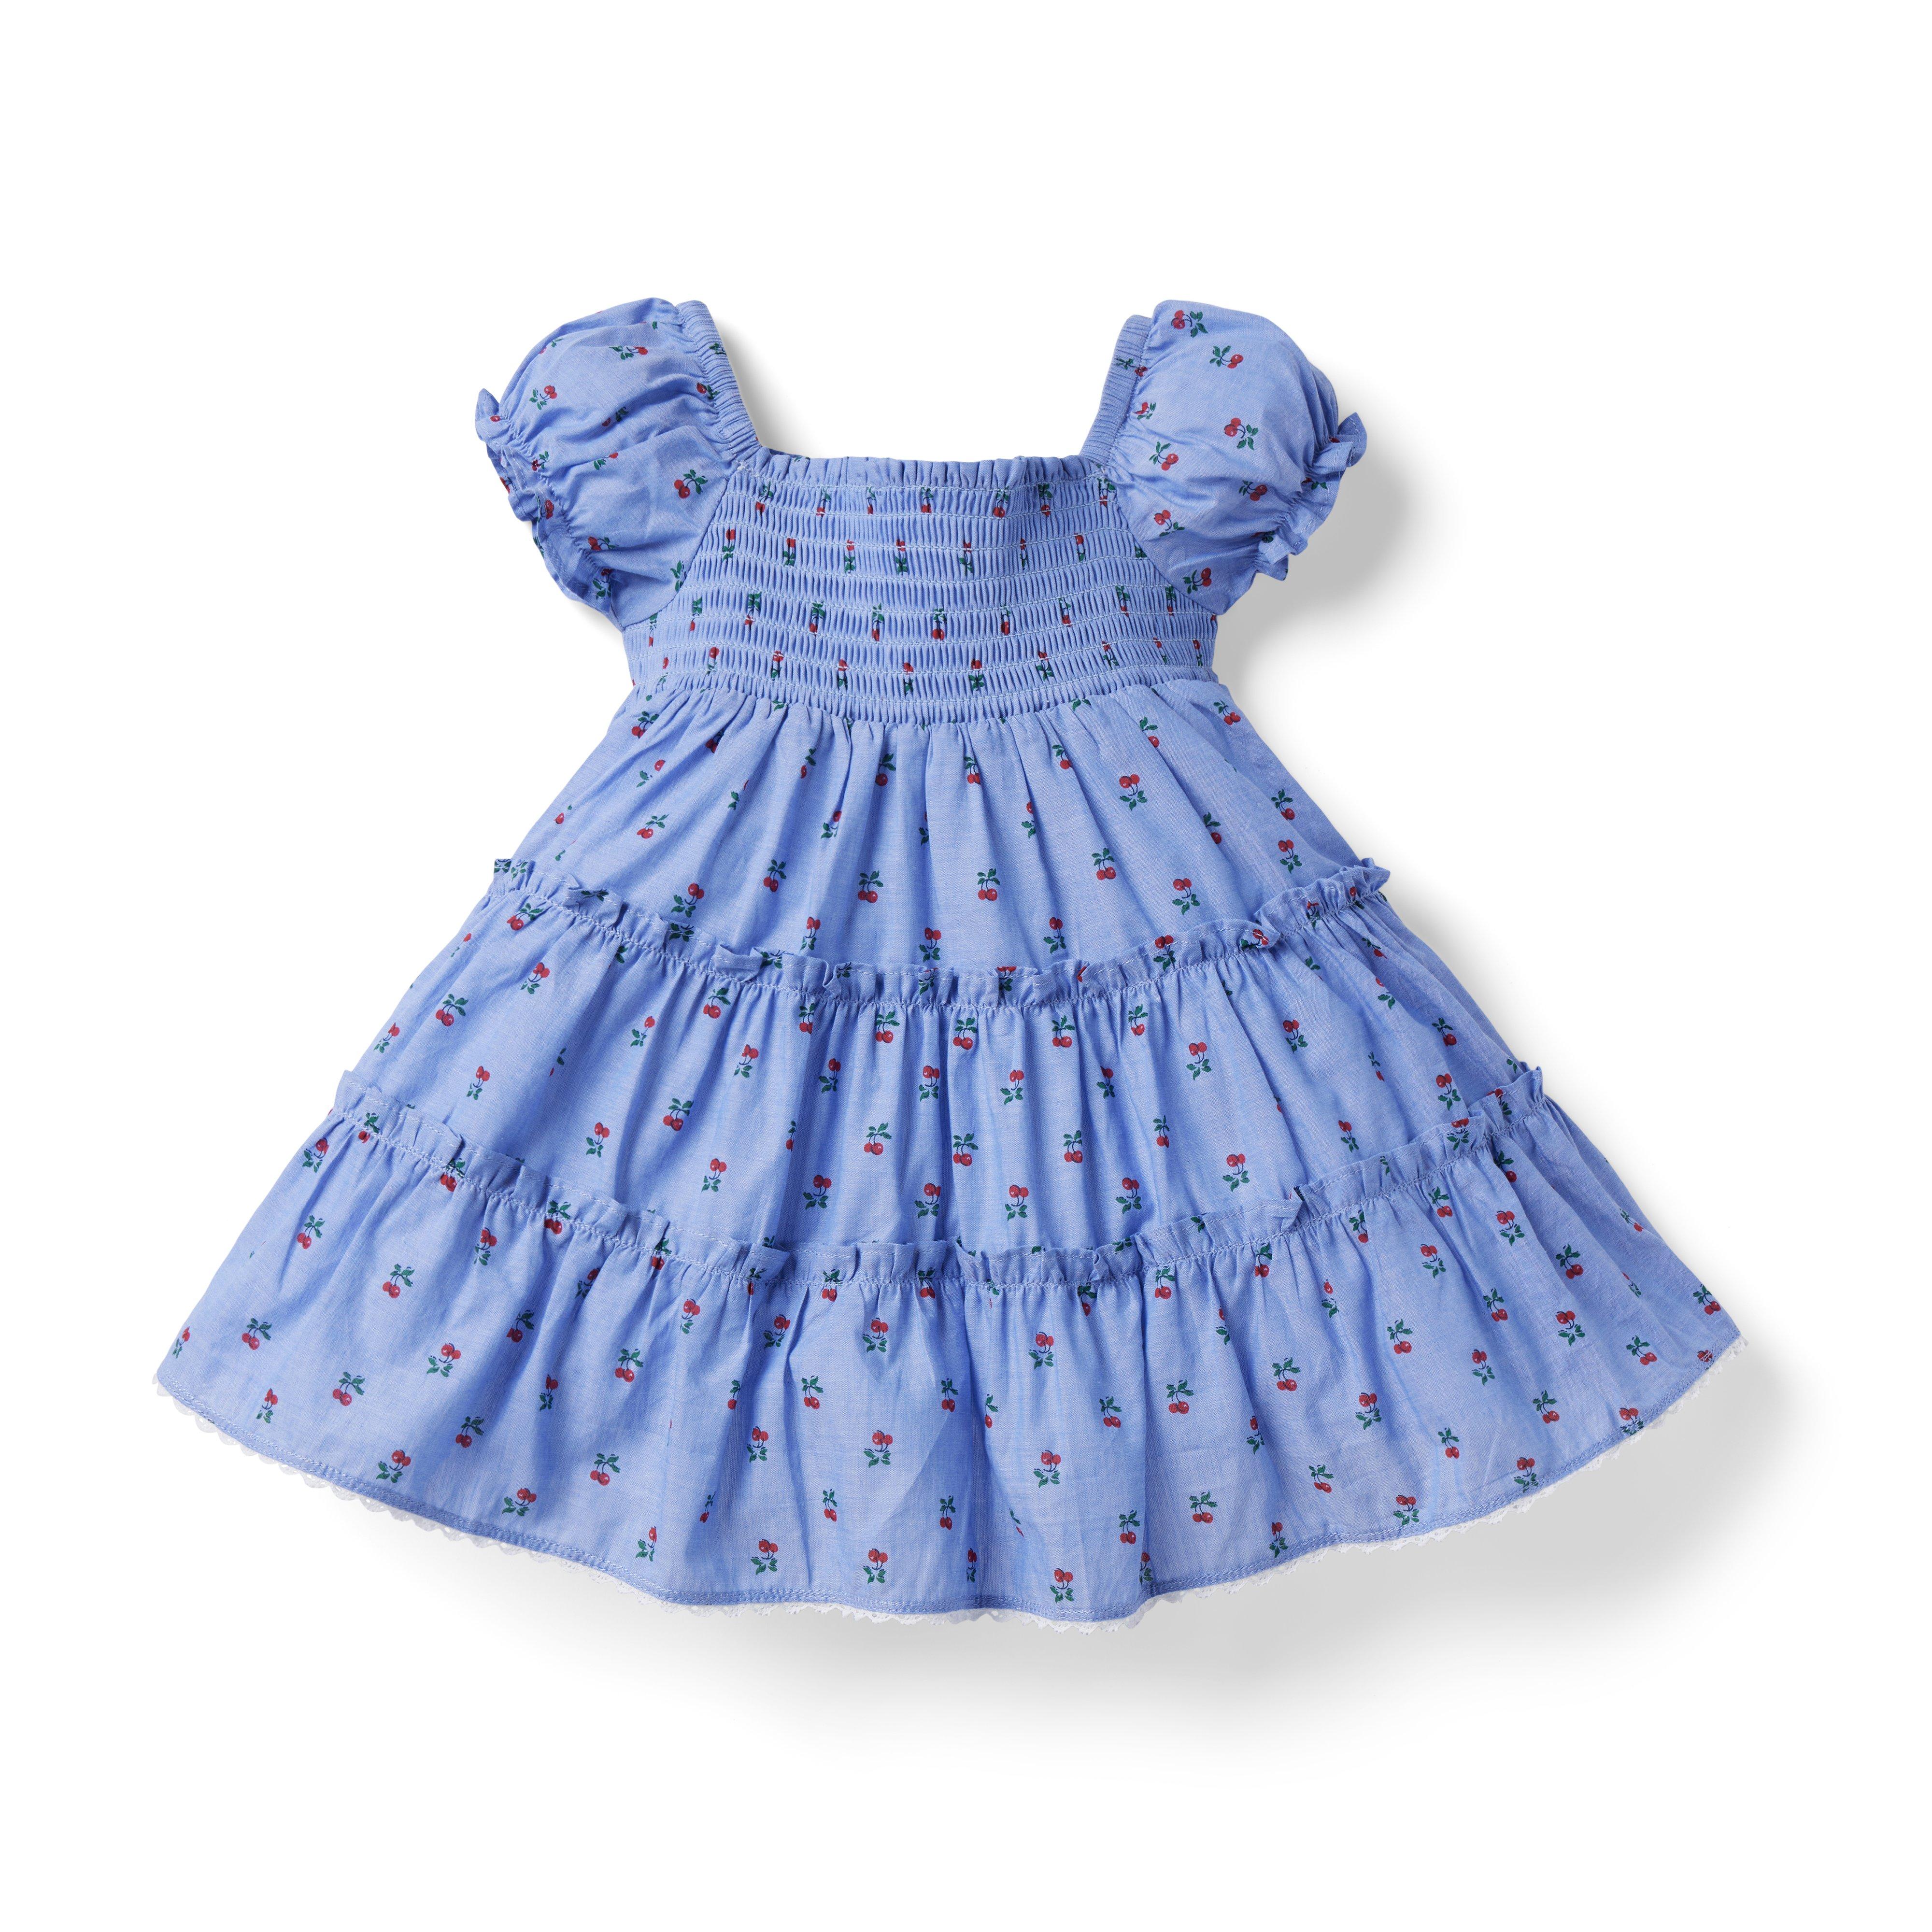 The Abigail Cherry Smocked Baby Dress